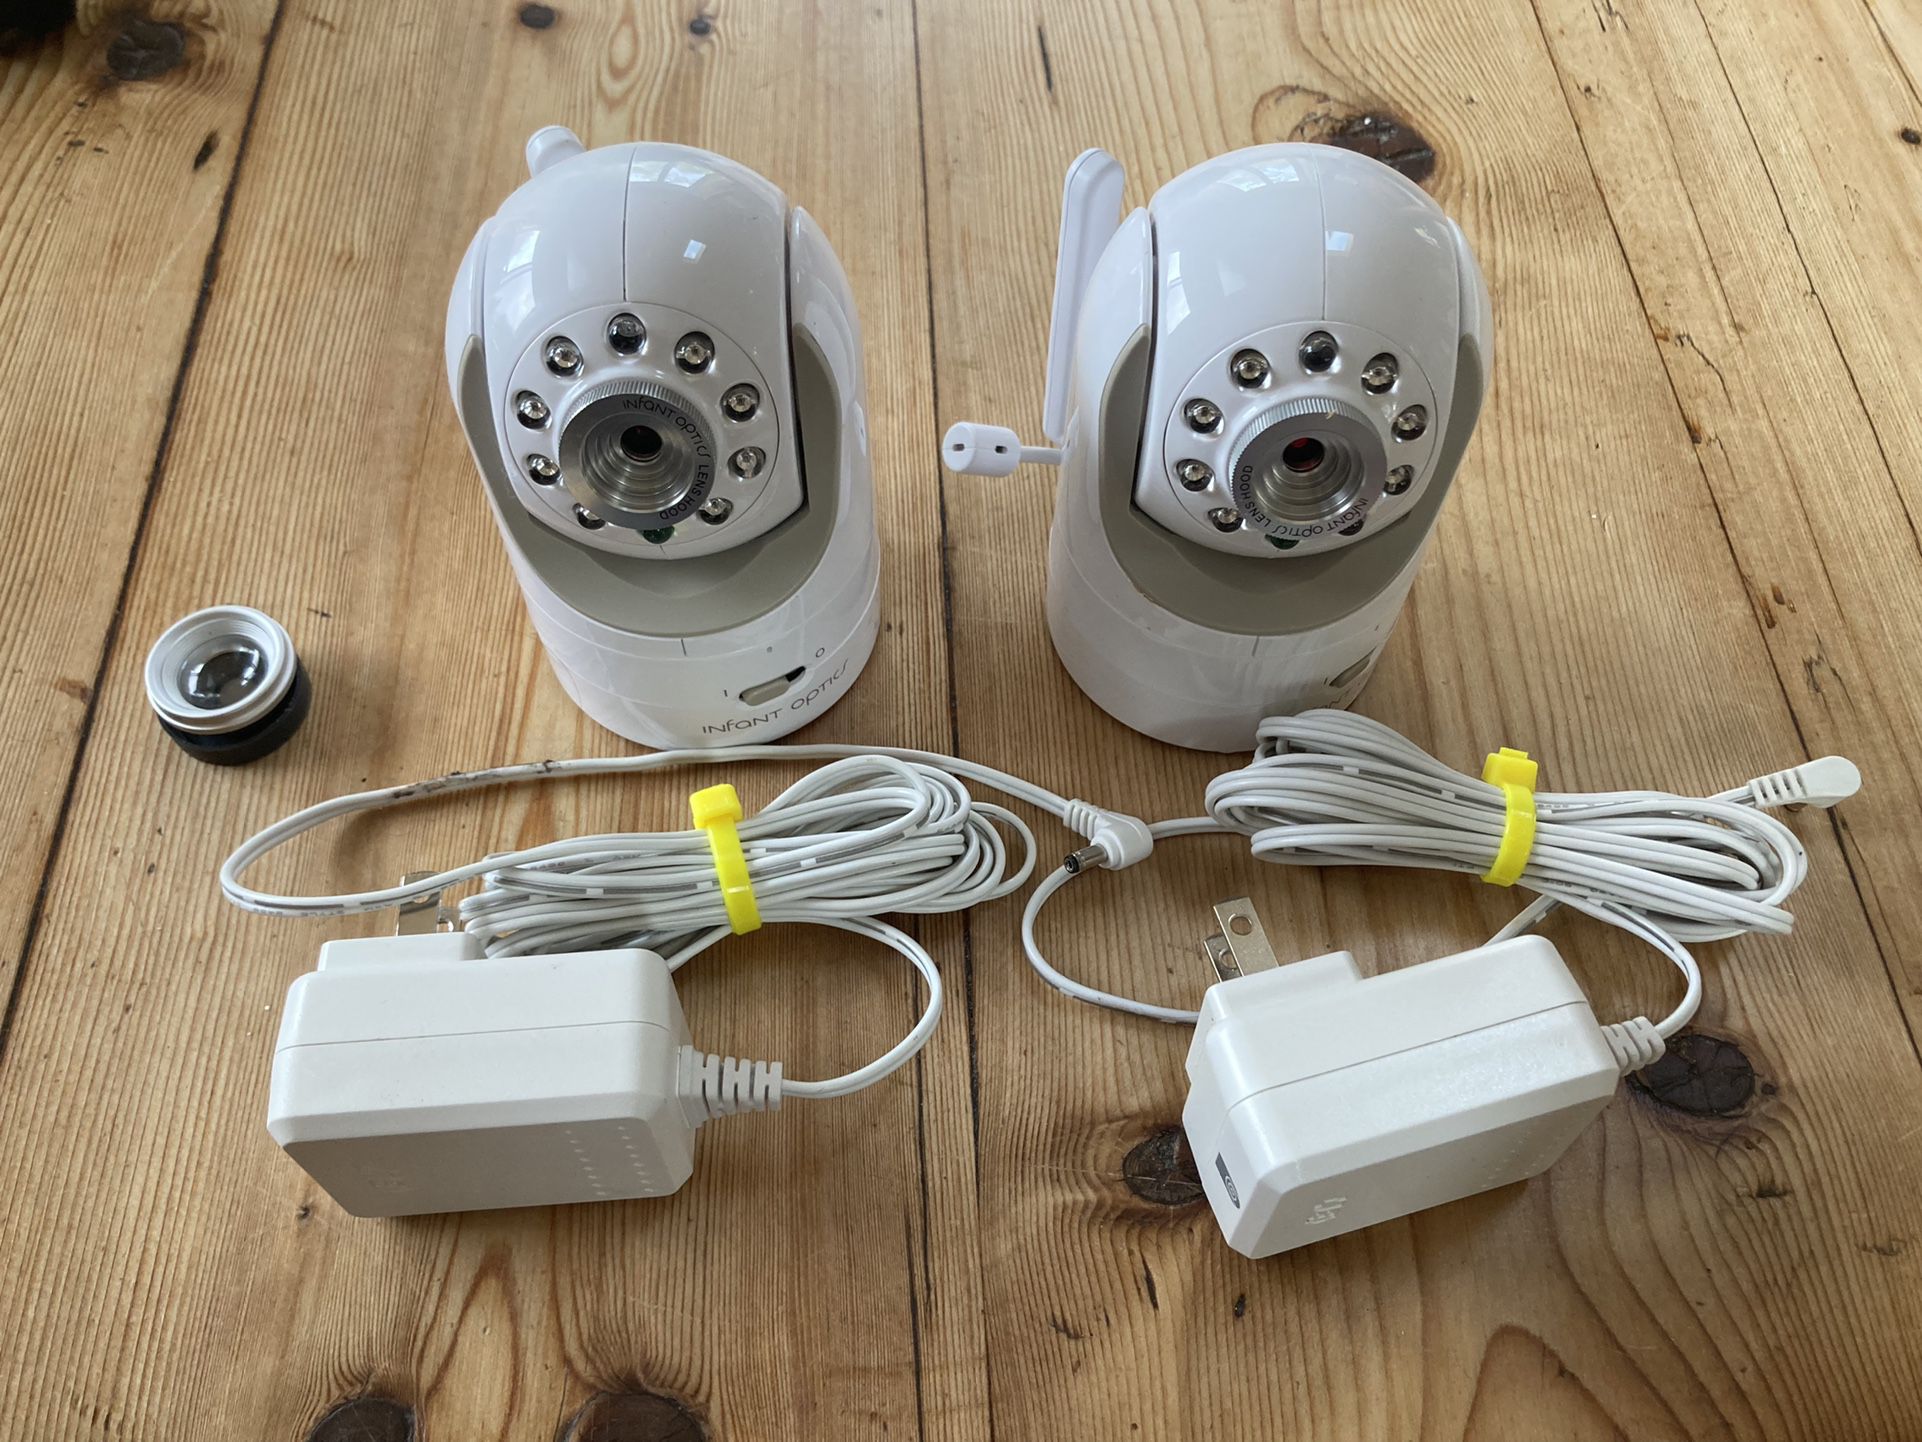 Infant Optics DXR-8 Baby Monitor Add On Cameras